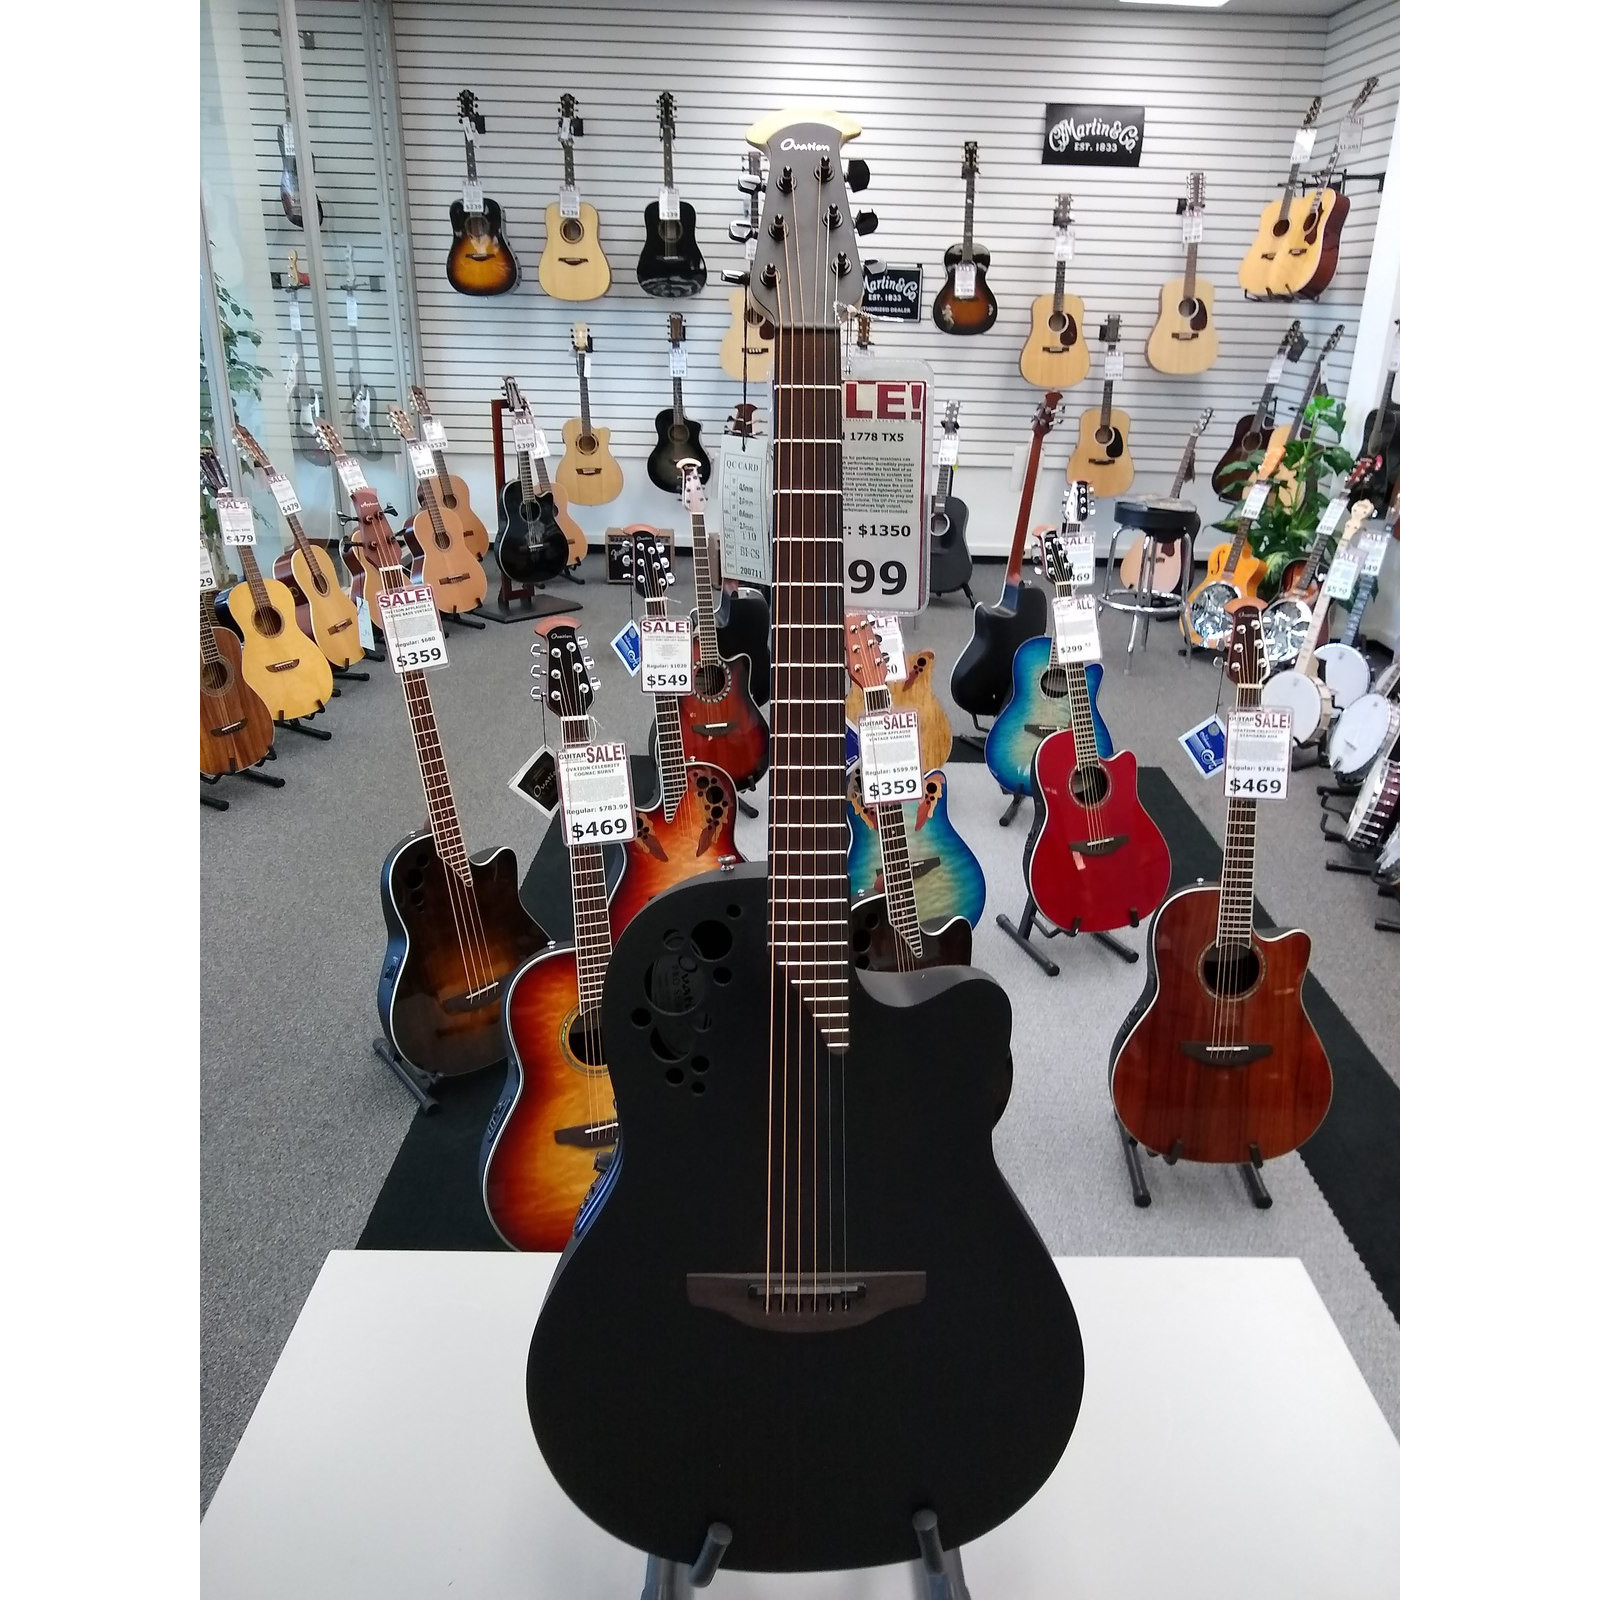 Ovation 1778 TX-5 Guitar - Black Textured